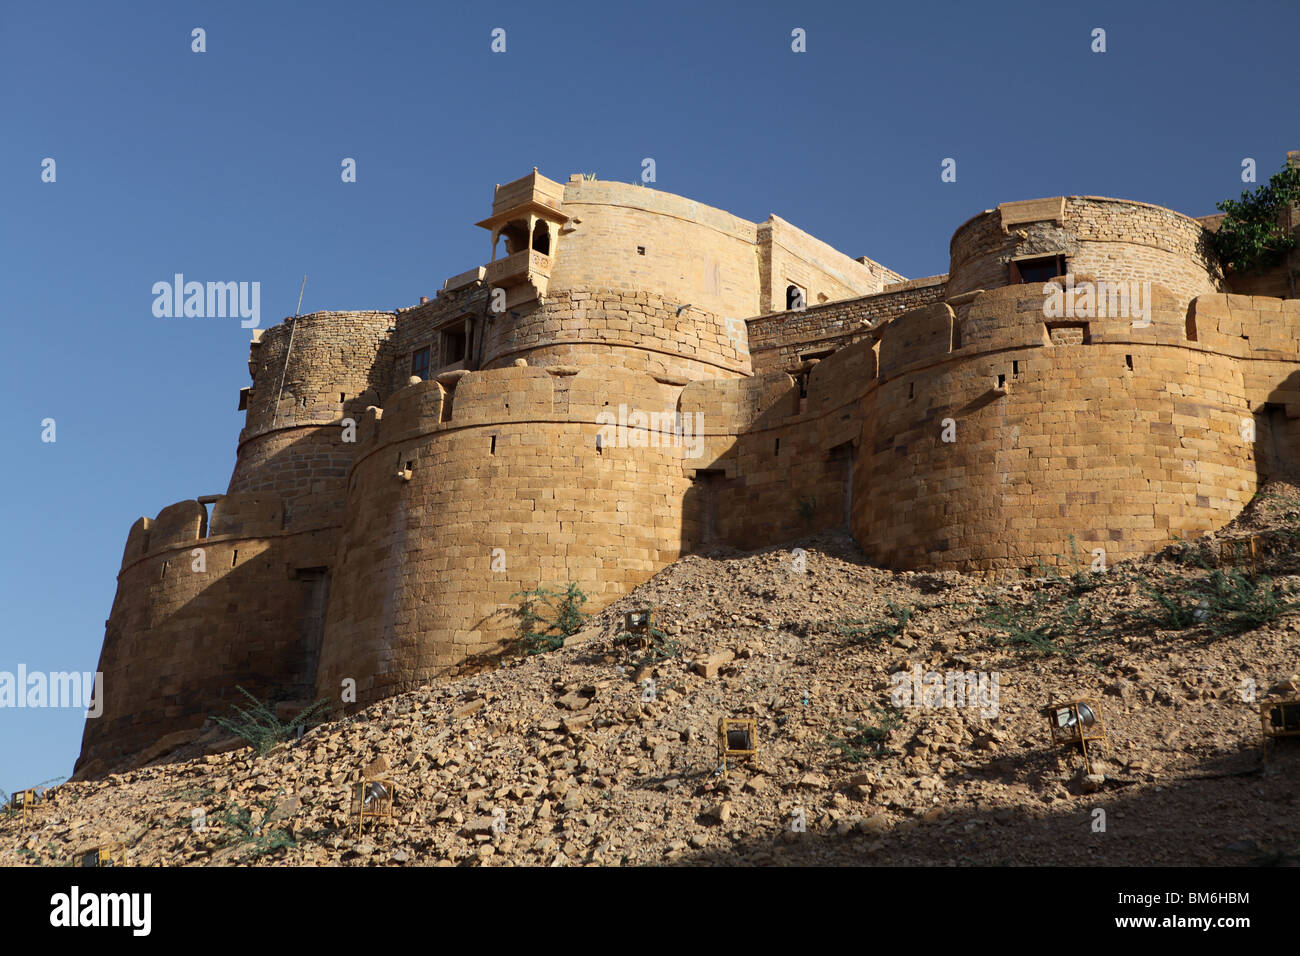 View of thr bastions of Jaisalmer Fort, built on Trikuta Hill in Jaisalmer, Rajasthan, India. Stock Photo